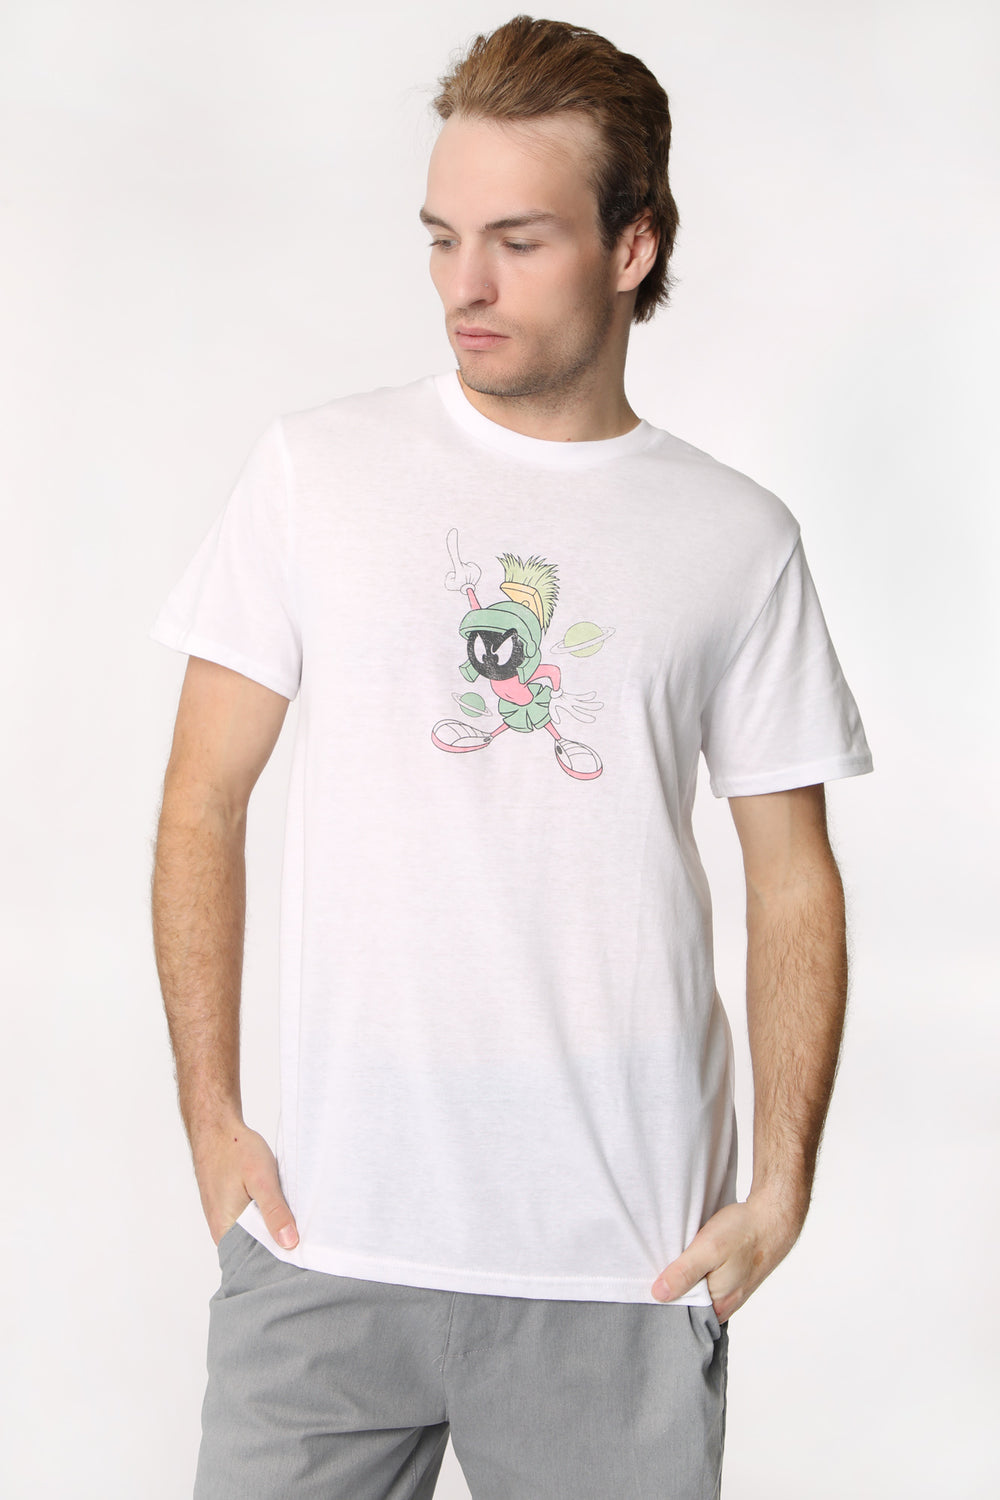 Mens Marvin The Martian T-Shirt Mens Marvin The Martian T-Shirt